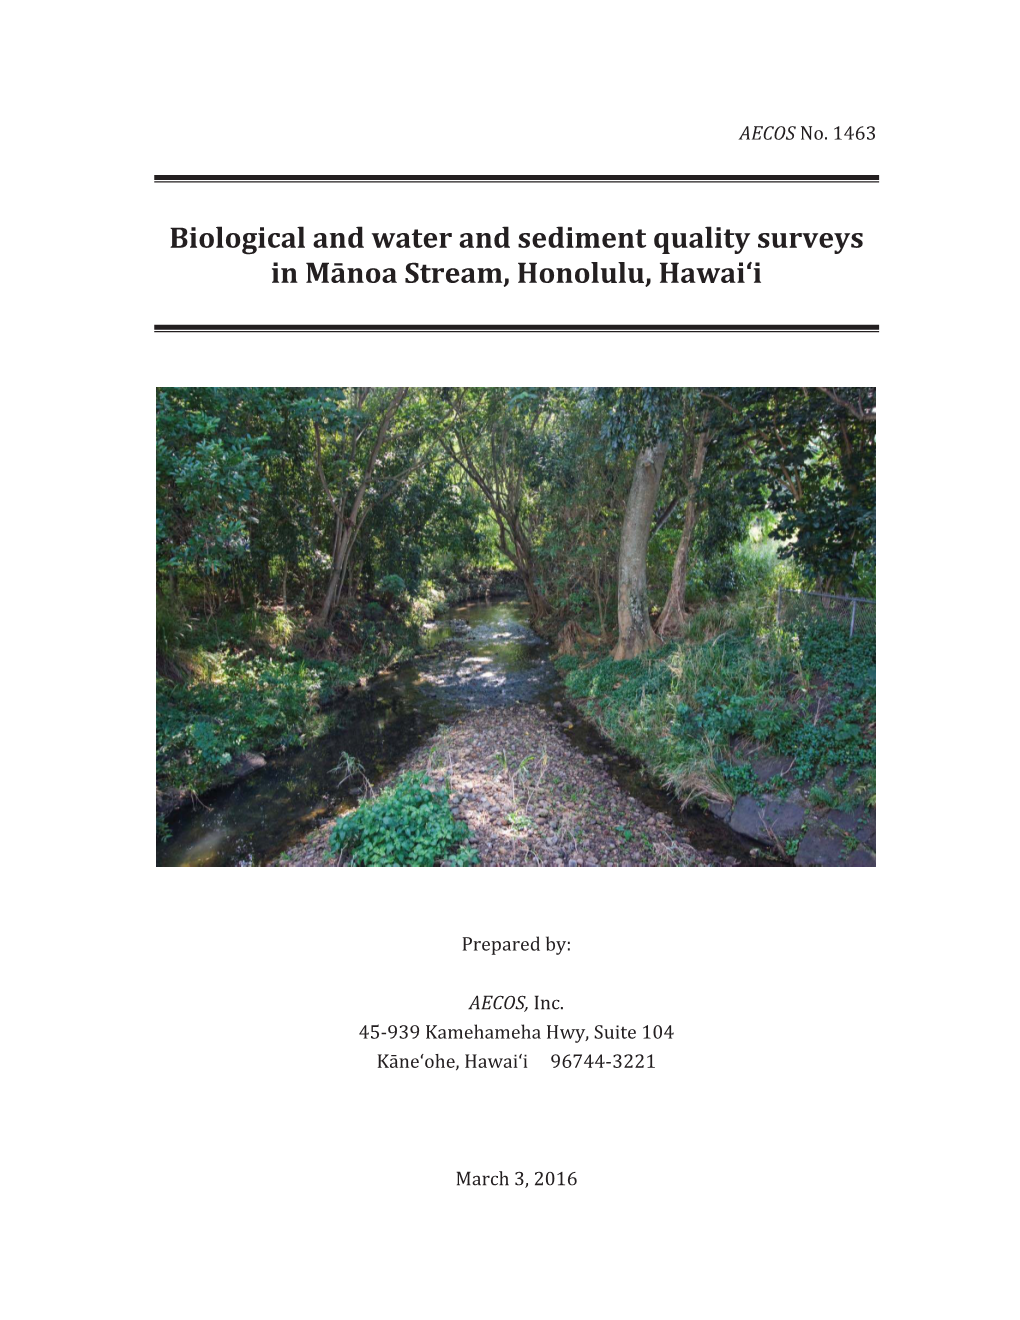 Biological and Water and Sediment Quality Surveys in Mānoa Stream, Honolulu, Hawaiʻi